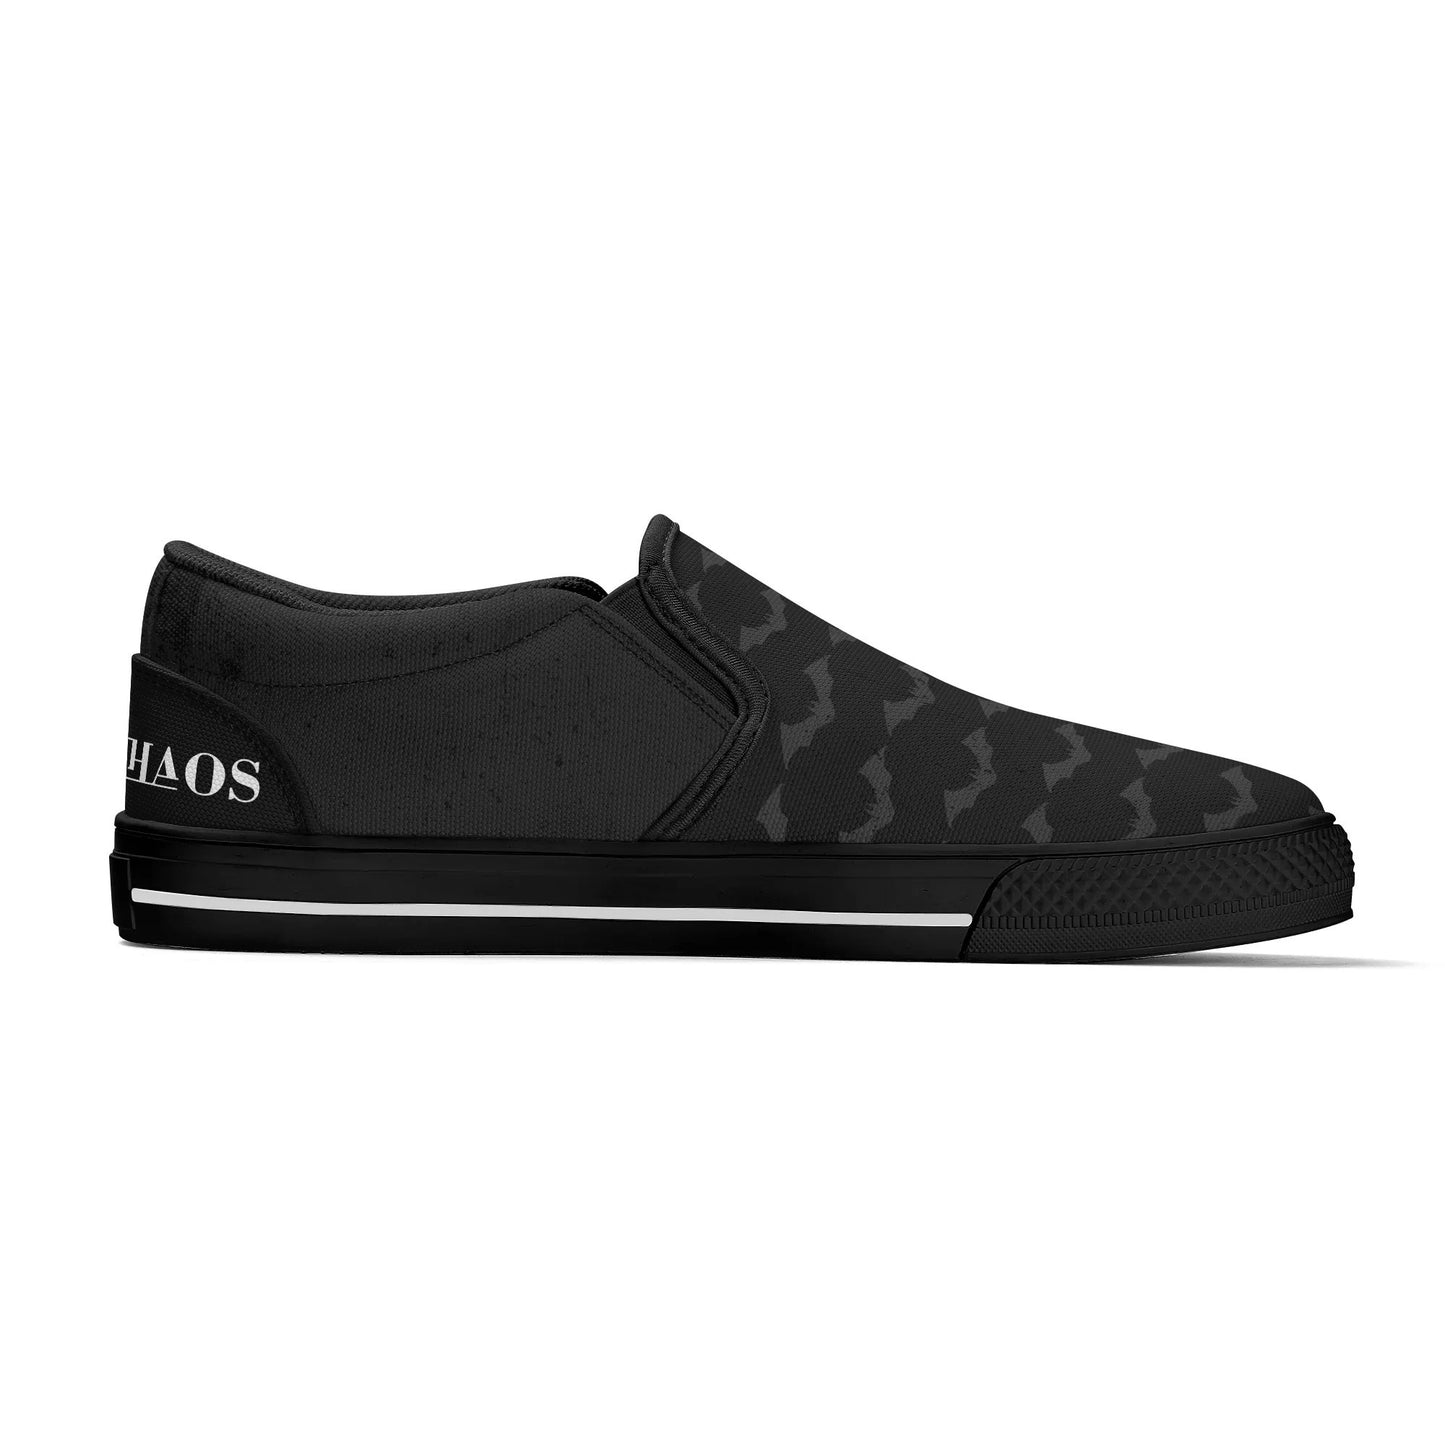 Nightbeed / Black Women's Slip On Shoes